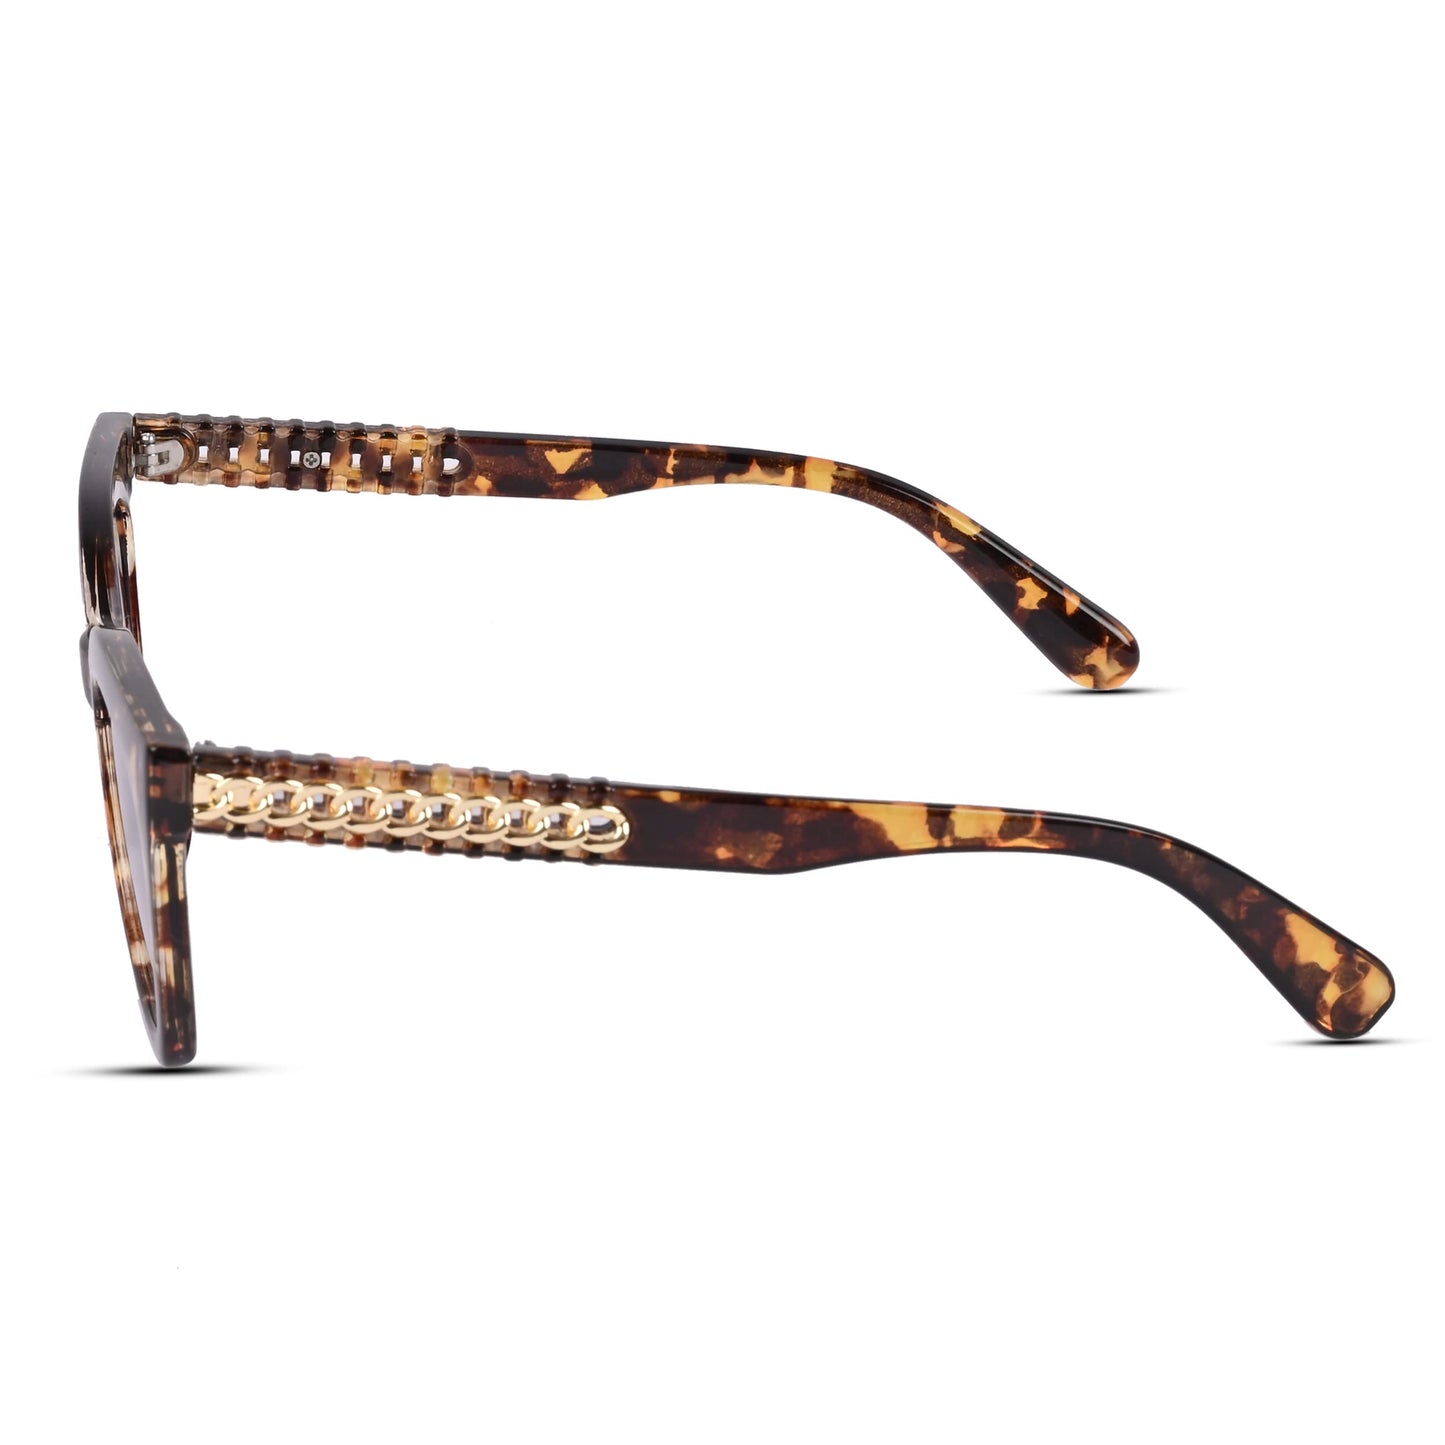 Voyage Gradient Grey Cat-Eye Sunglasses for Women (984MG3793 | Brown Frame | Grey Lens)